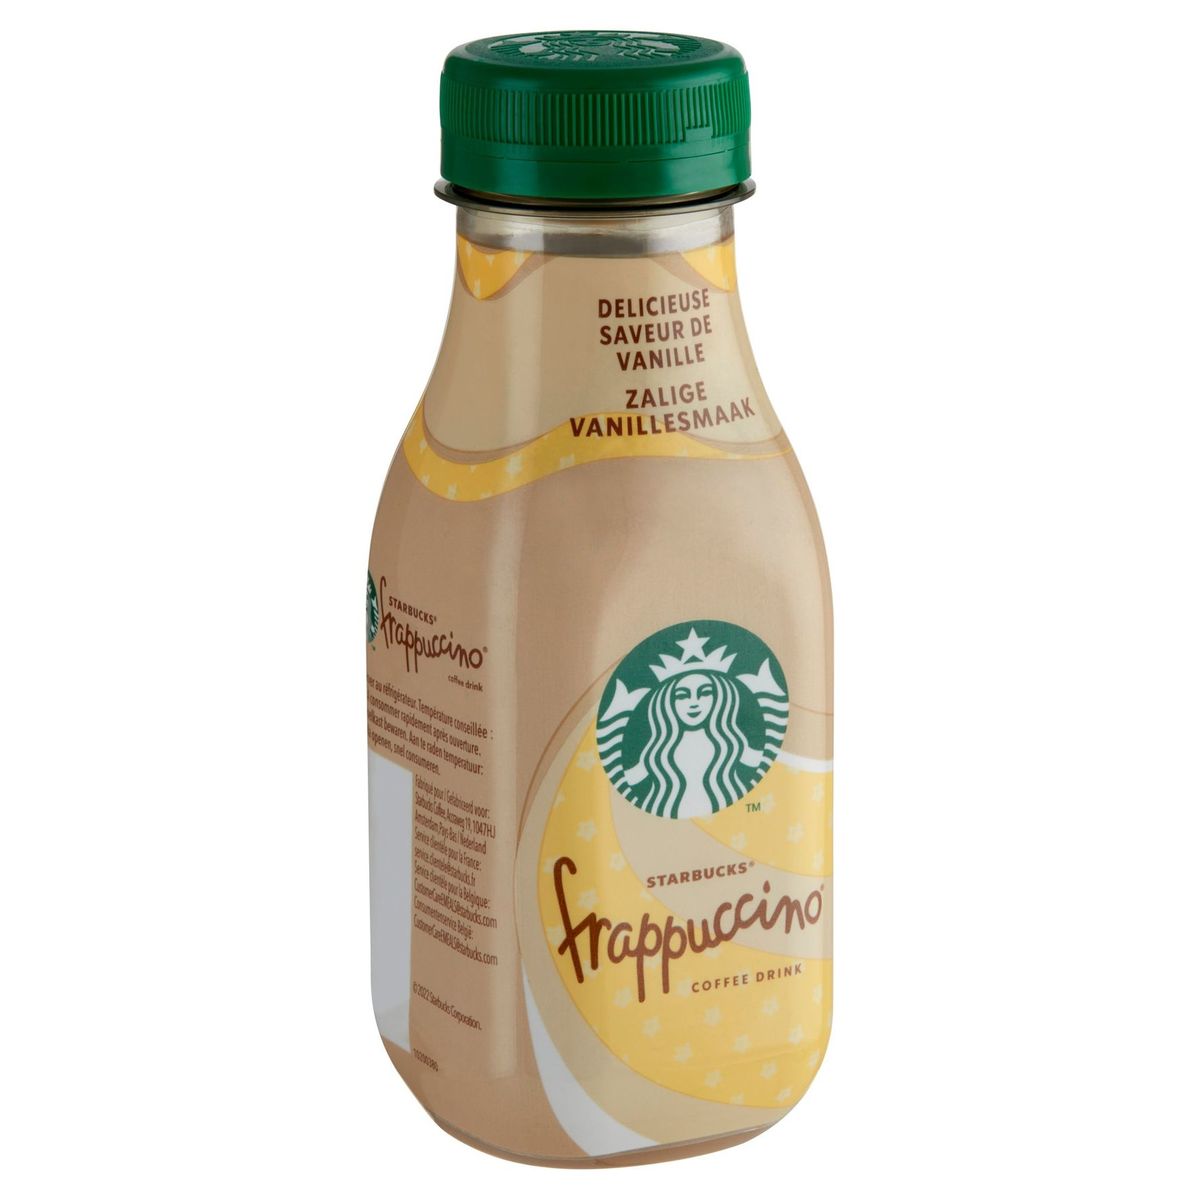 Starbucks Frappuccino Coffee Drink Zalige Vanillesmaak 250 ml